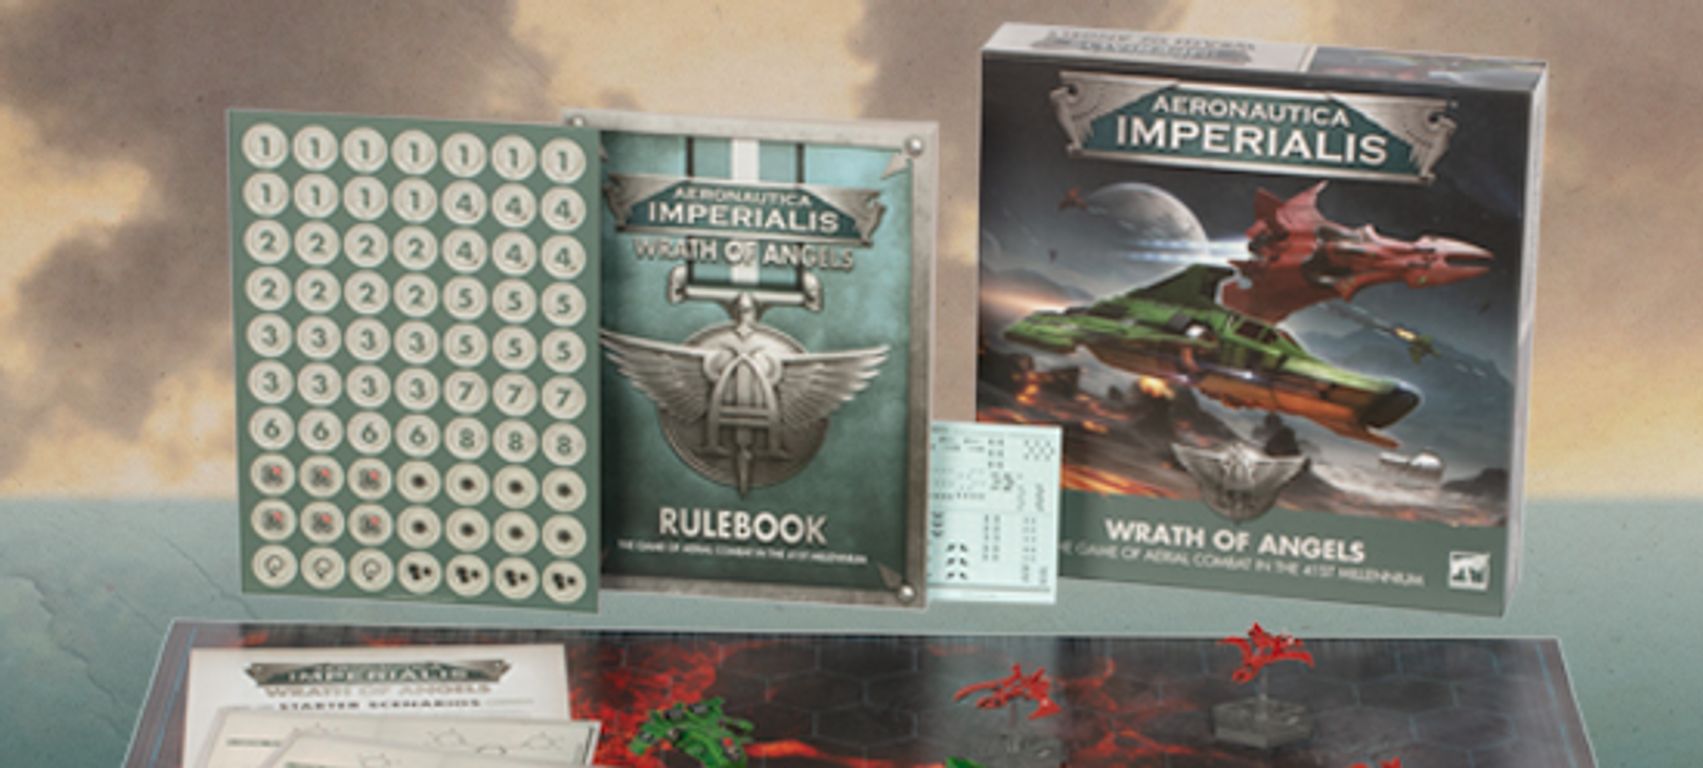 Aeronautica Imperialis: Wrath of Angels components